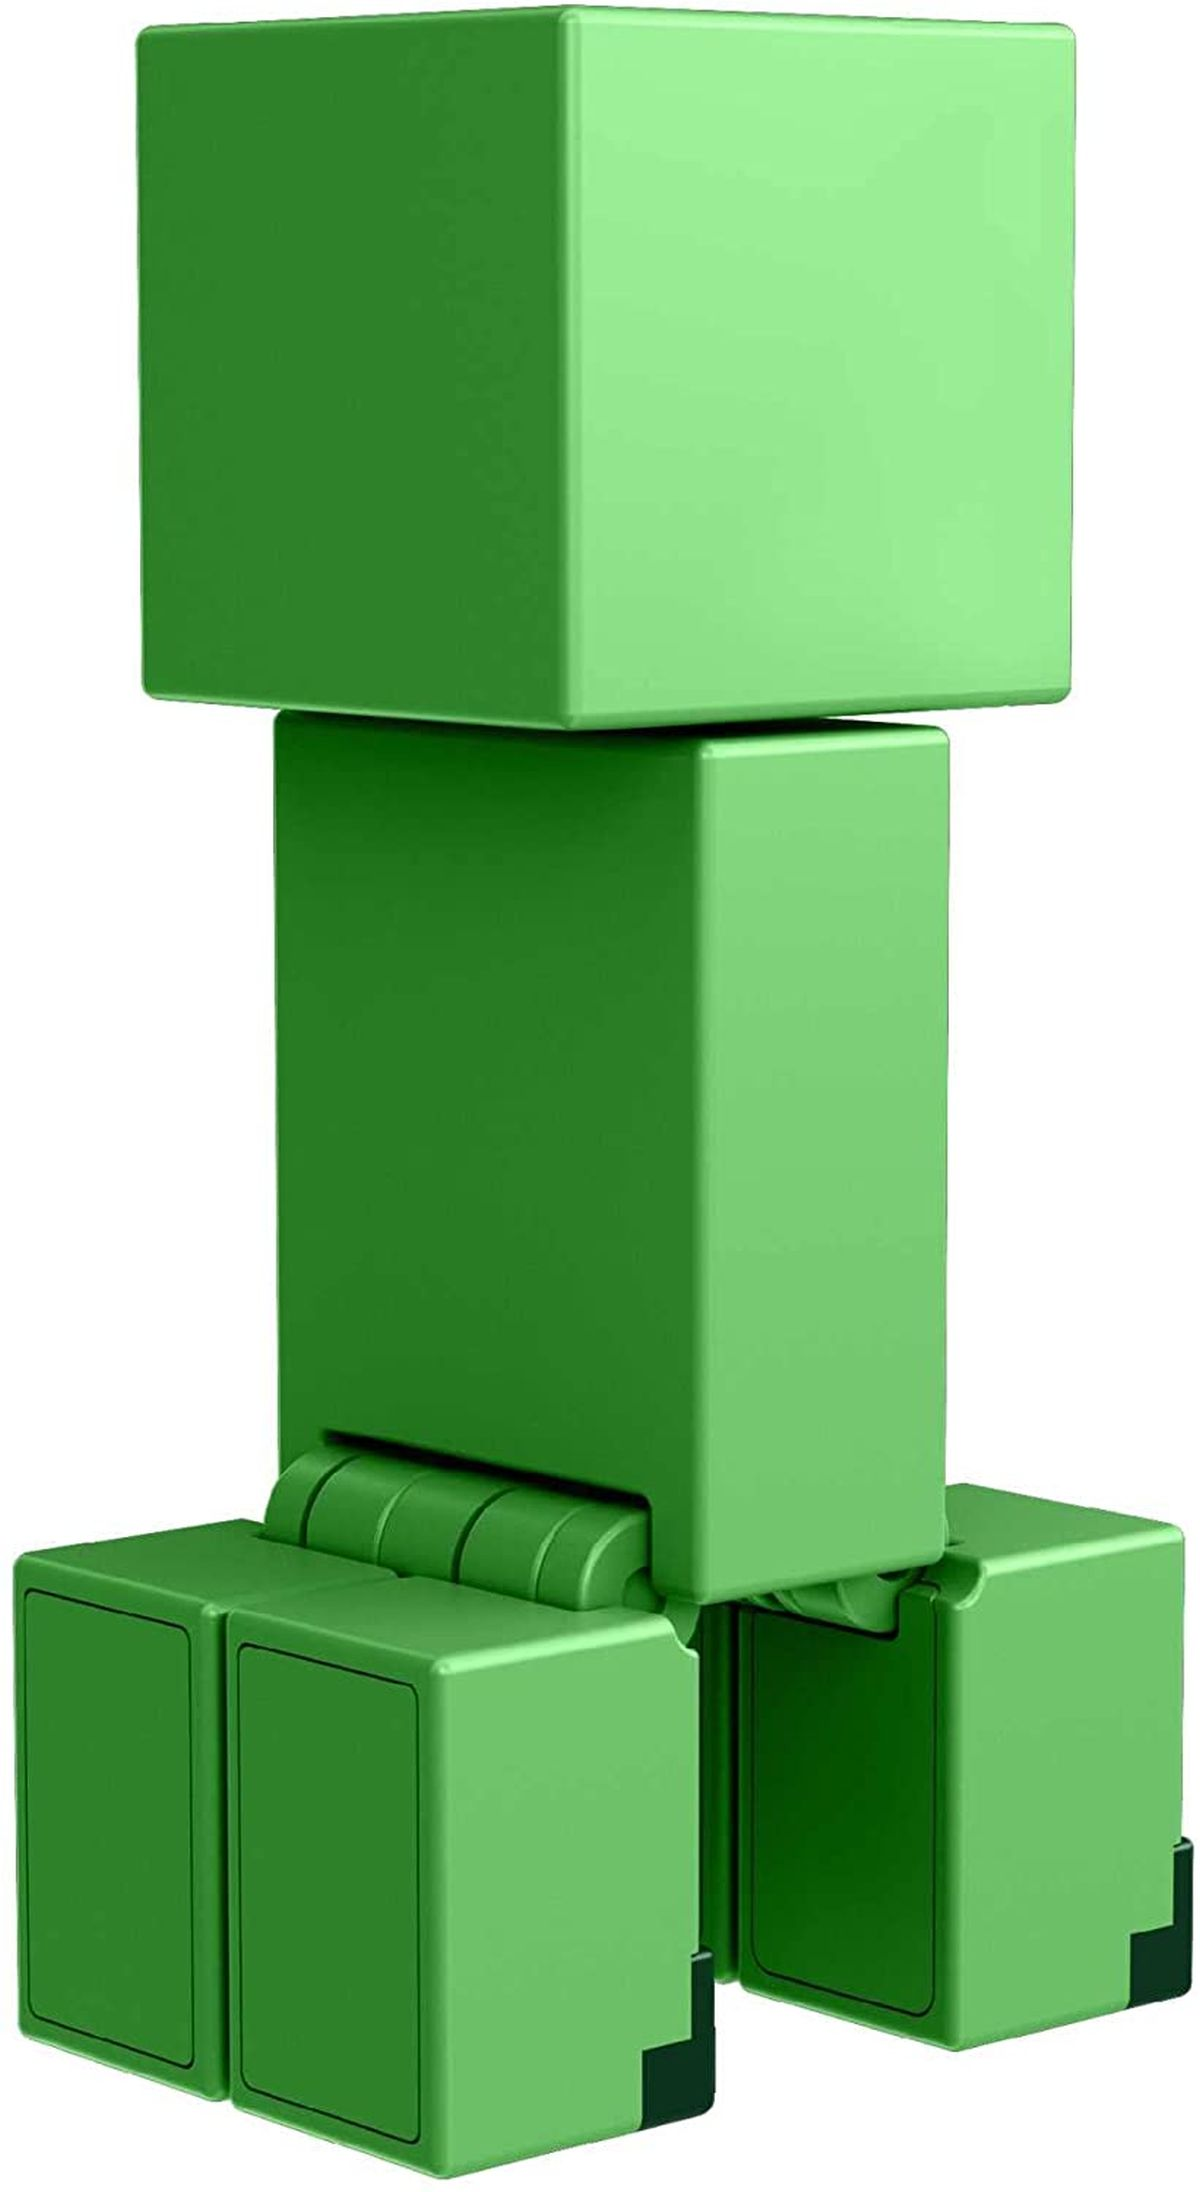 Creeper Minecraft - Figur